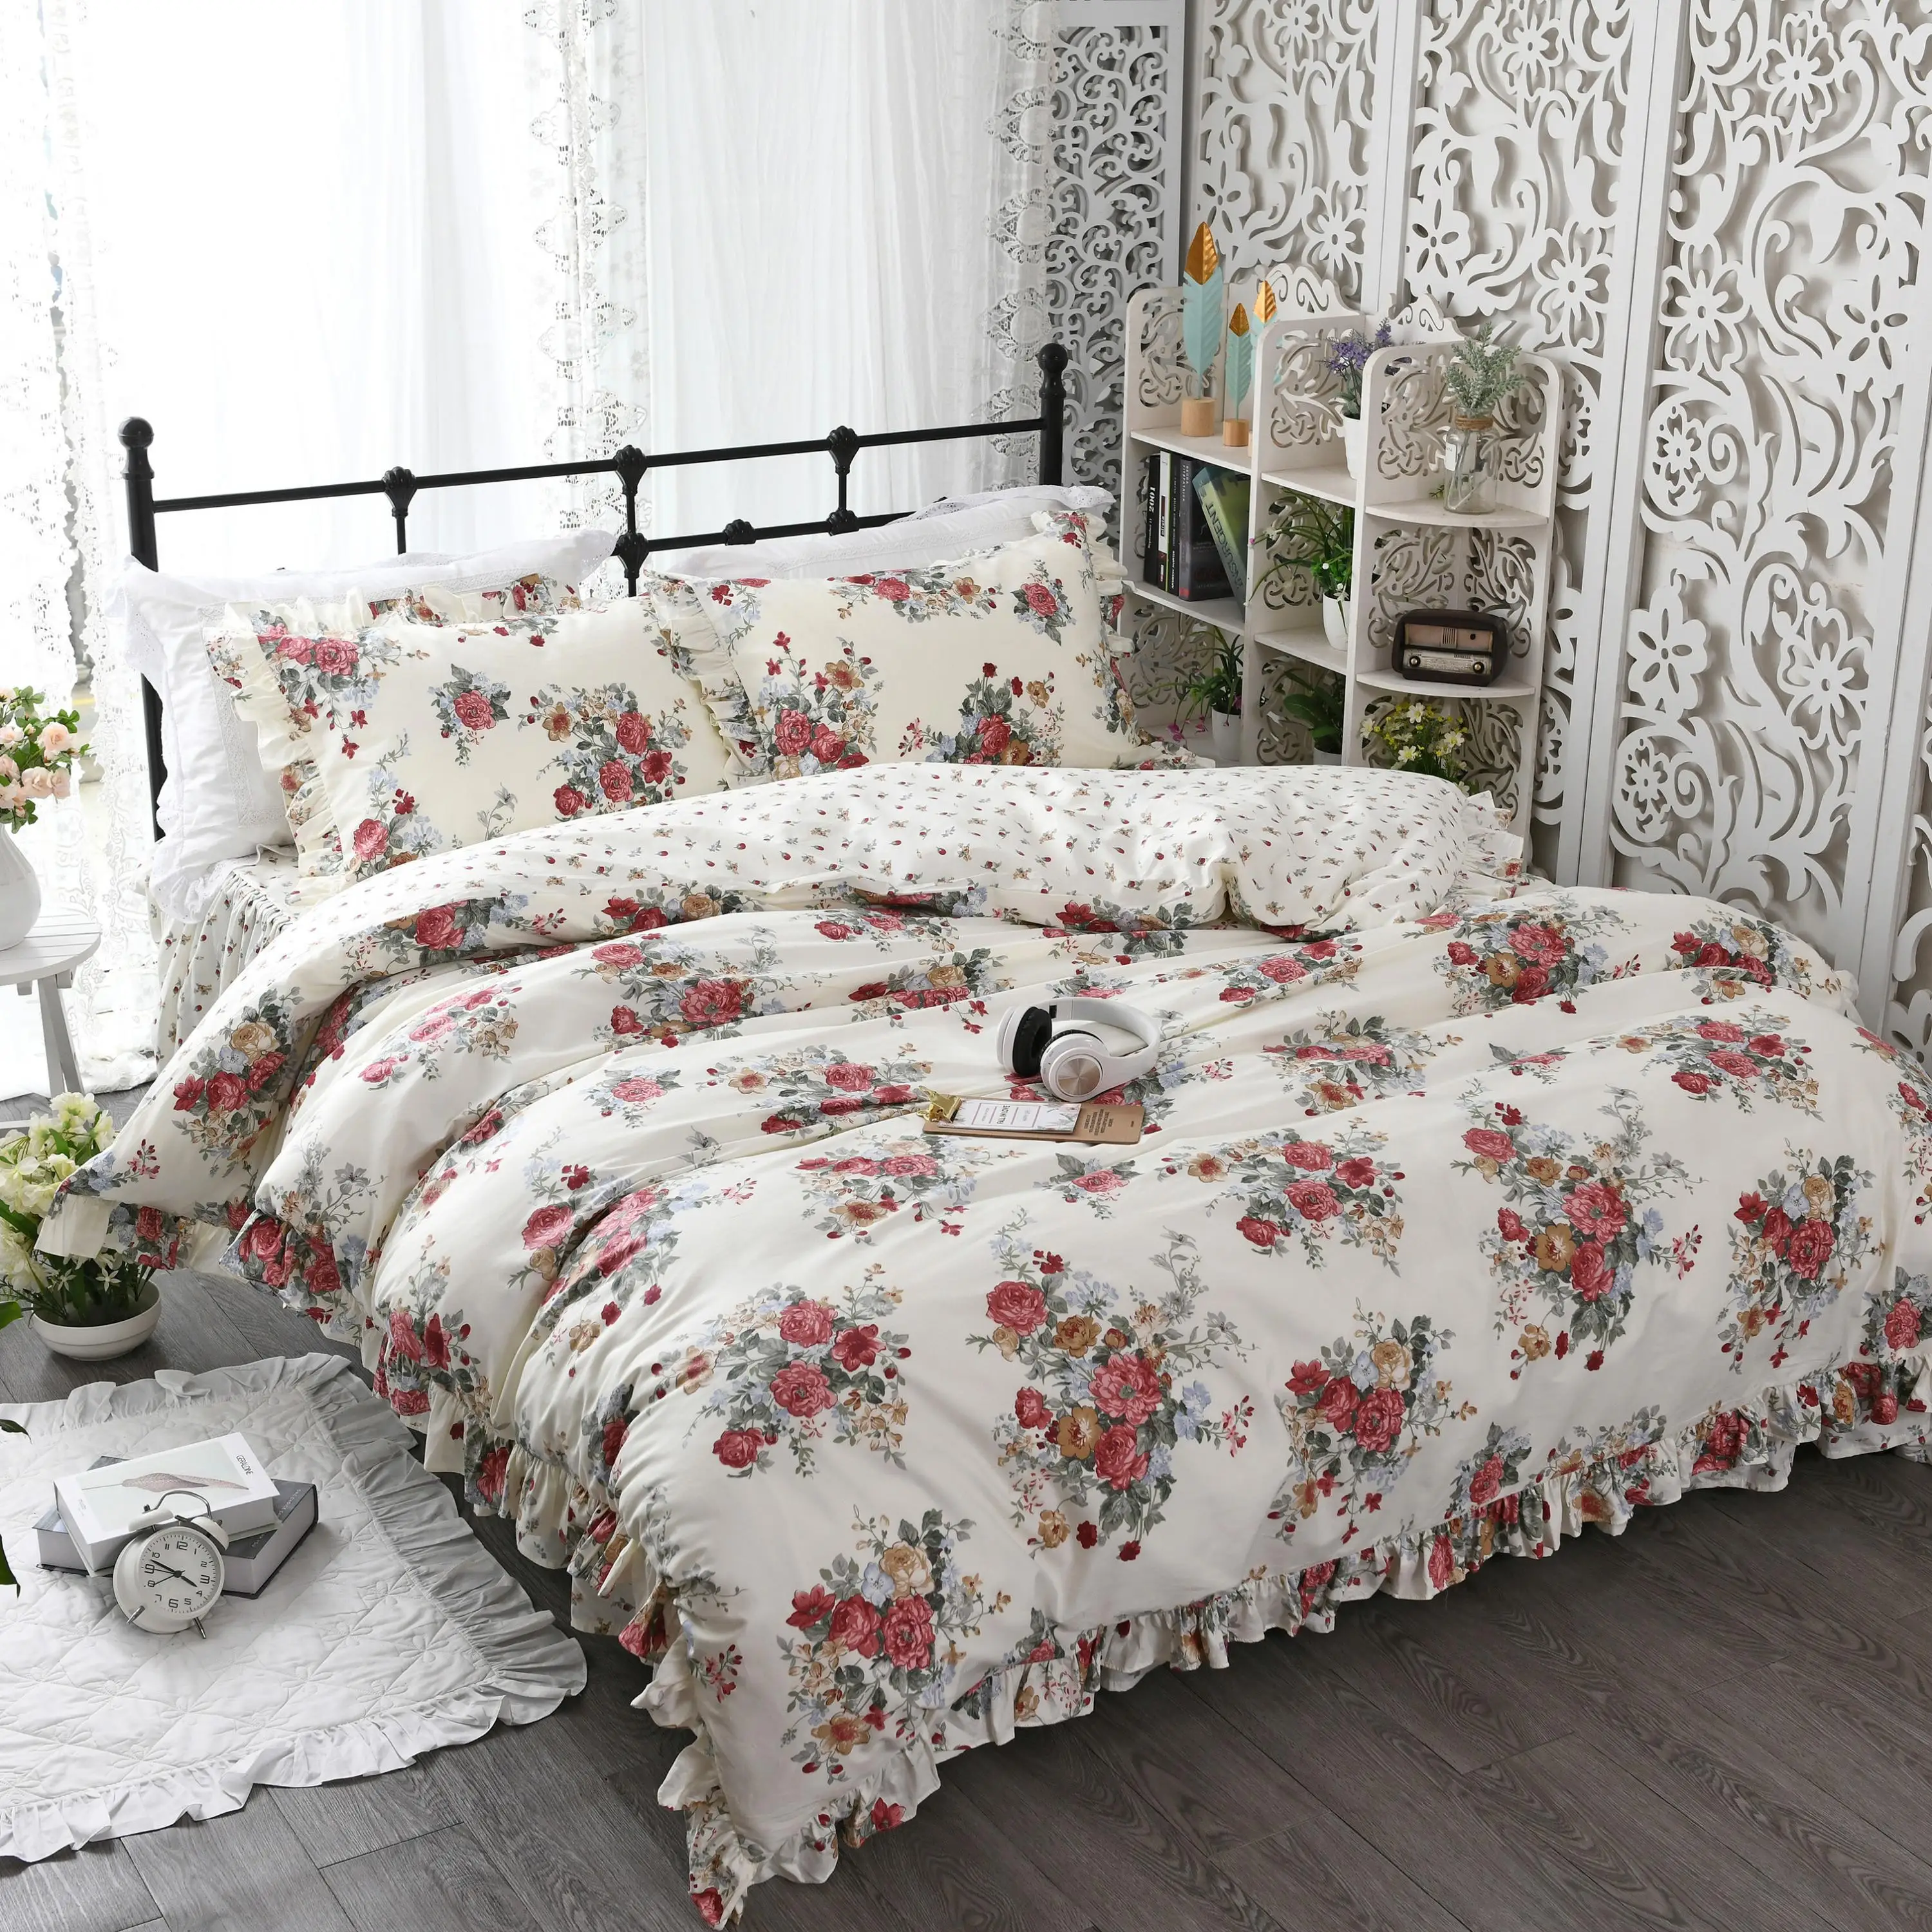 

Shabby Elegant Floral Ruffles Girls Duvet Cover Bedskirt Comforter/Duevt Cover 100%Cotton 4Pcs Bedding Set Queen King Twin size